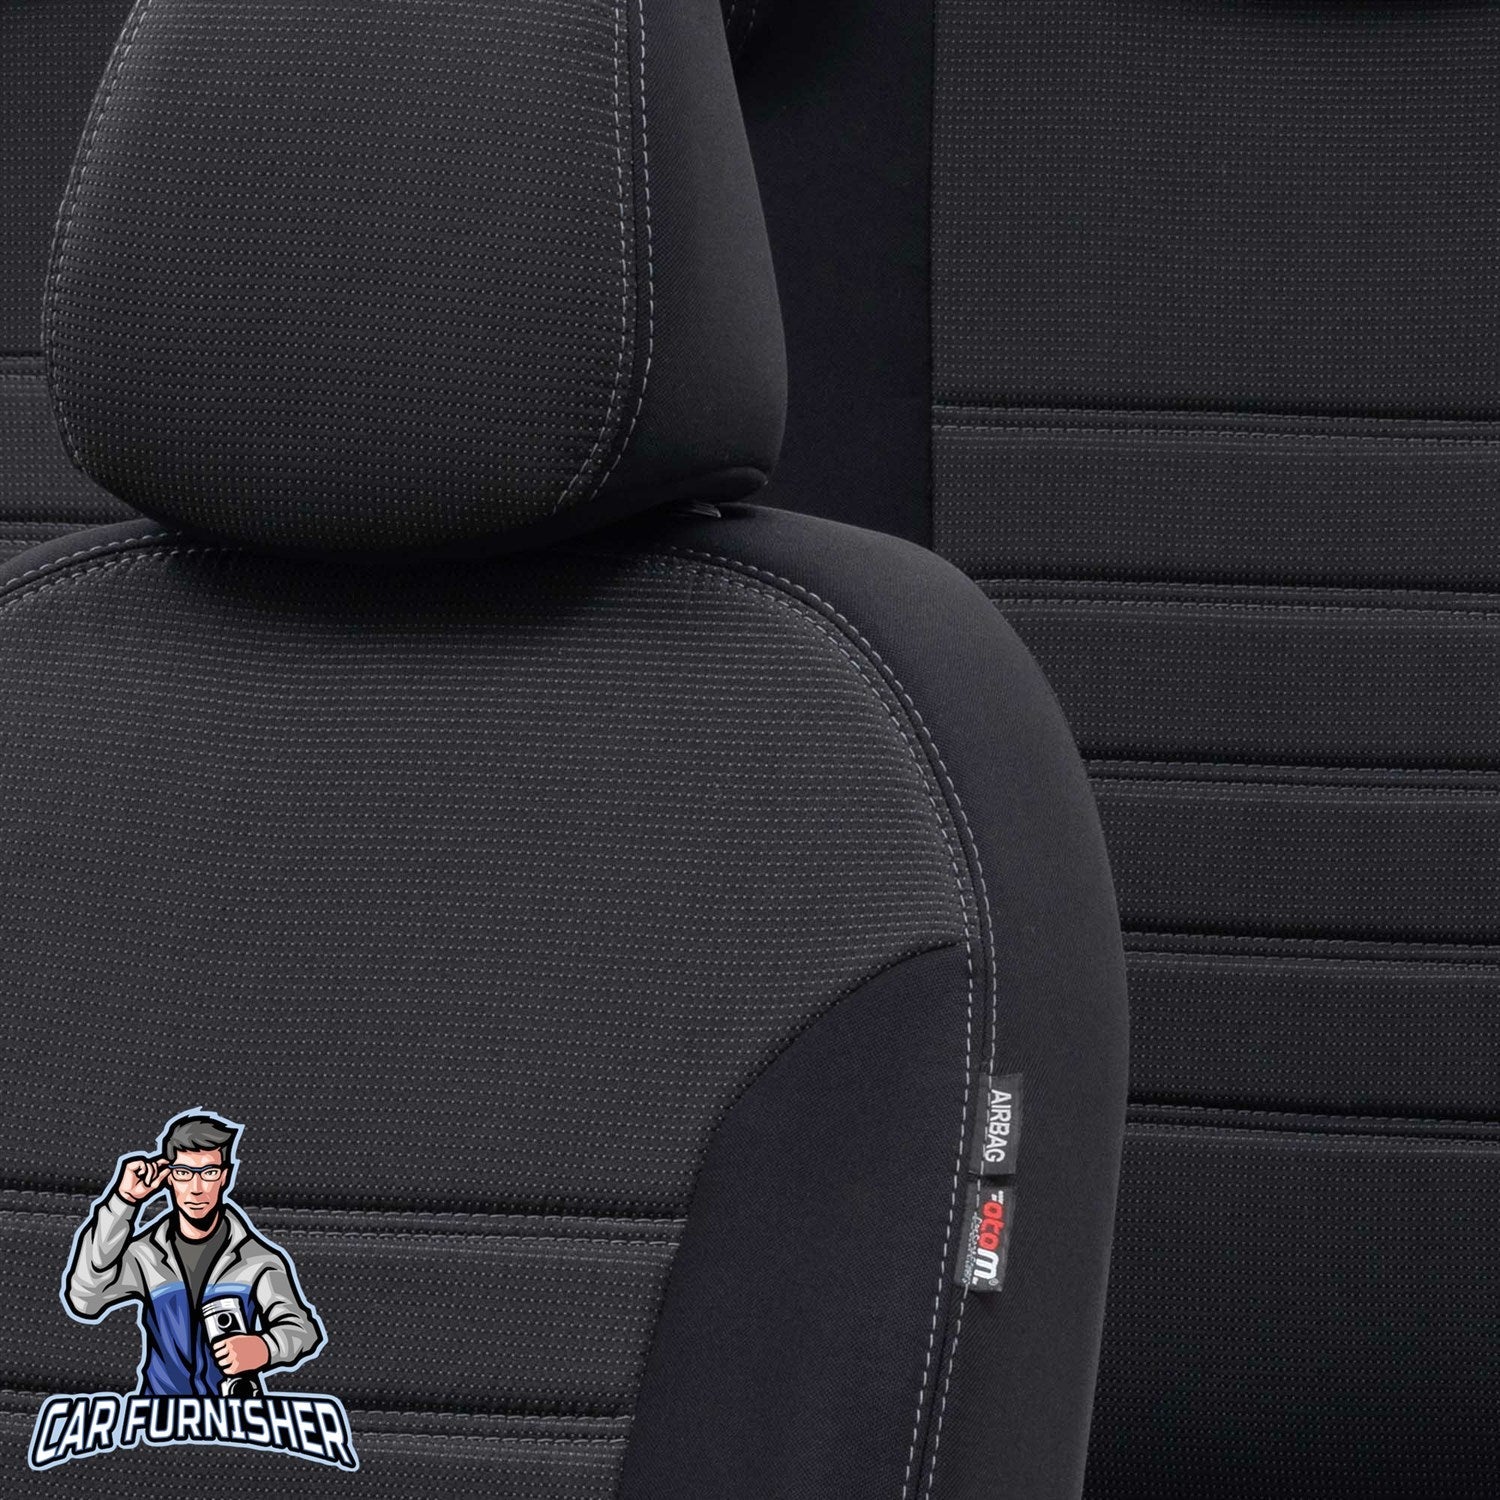 Opel Combo Seat Covers Original Jacquard Design Dark Gray Jacquard Fabric